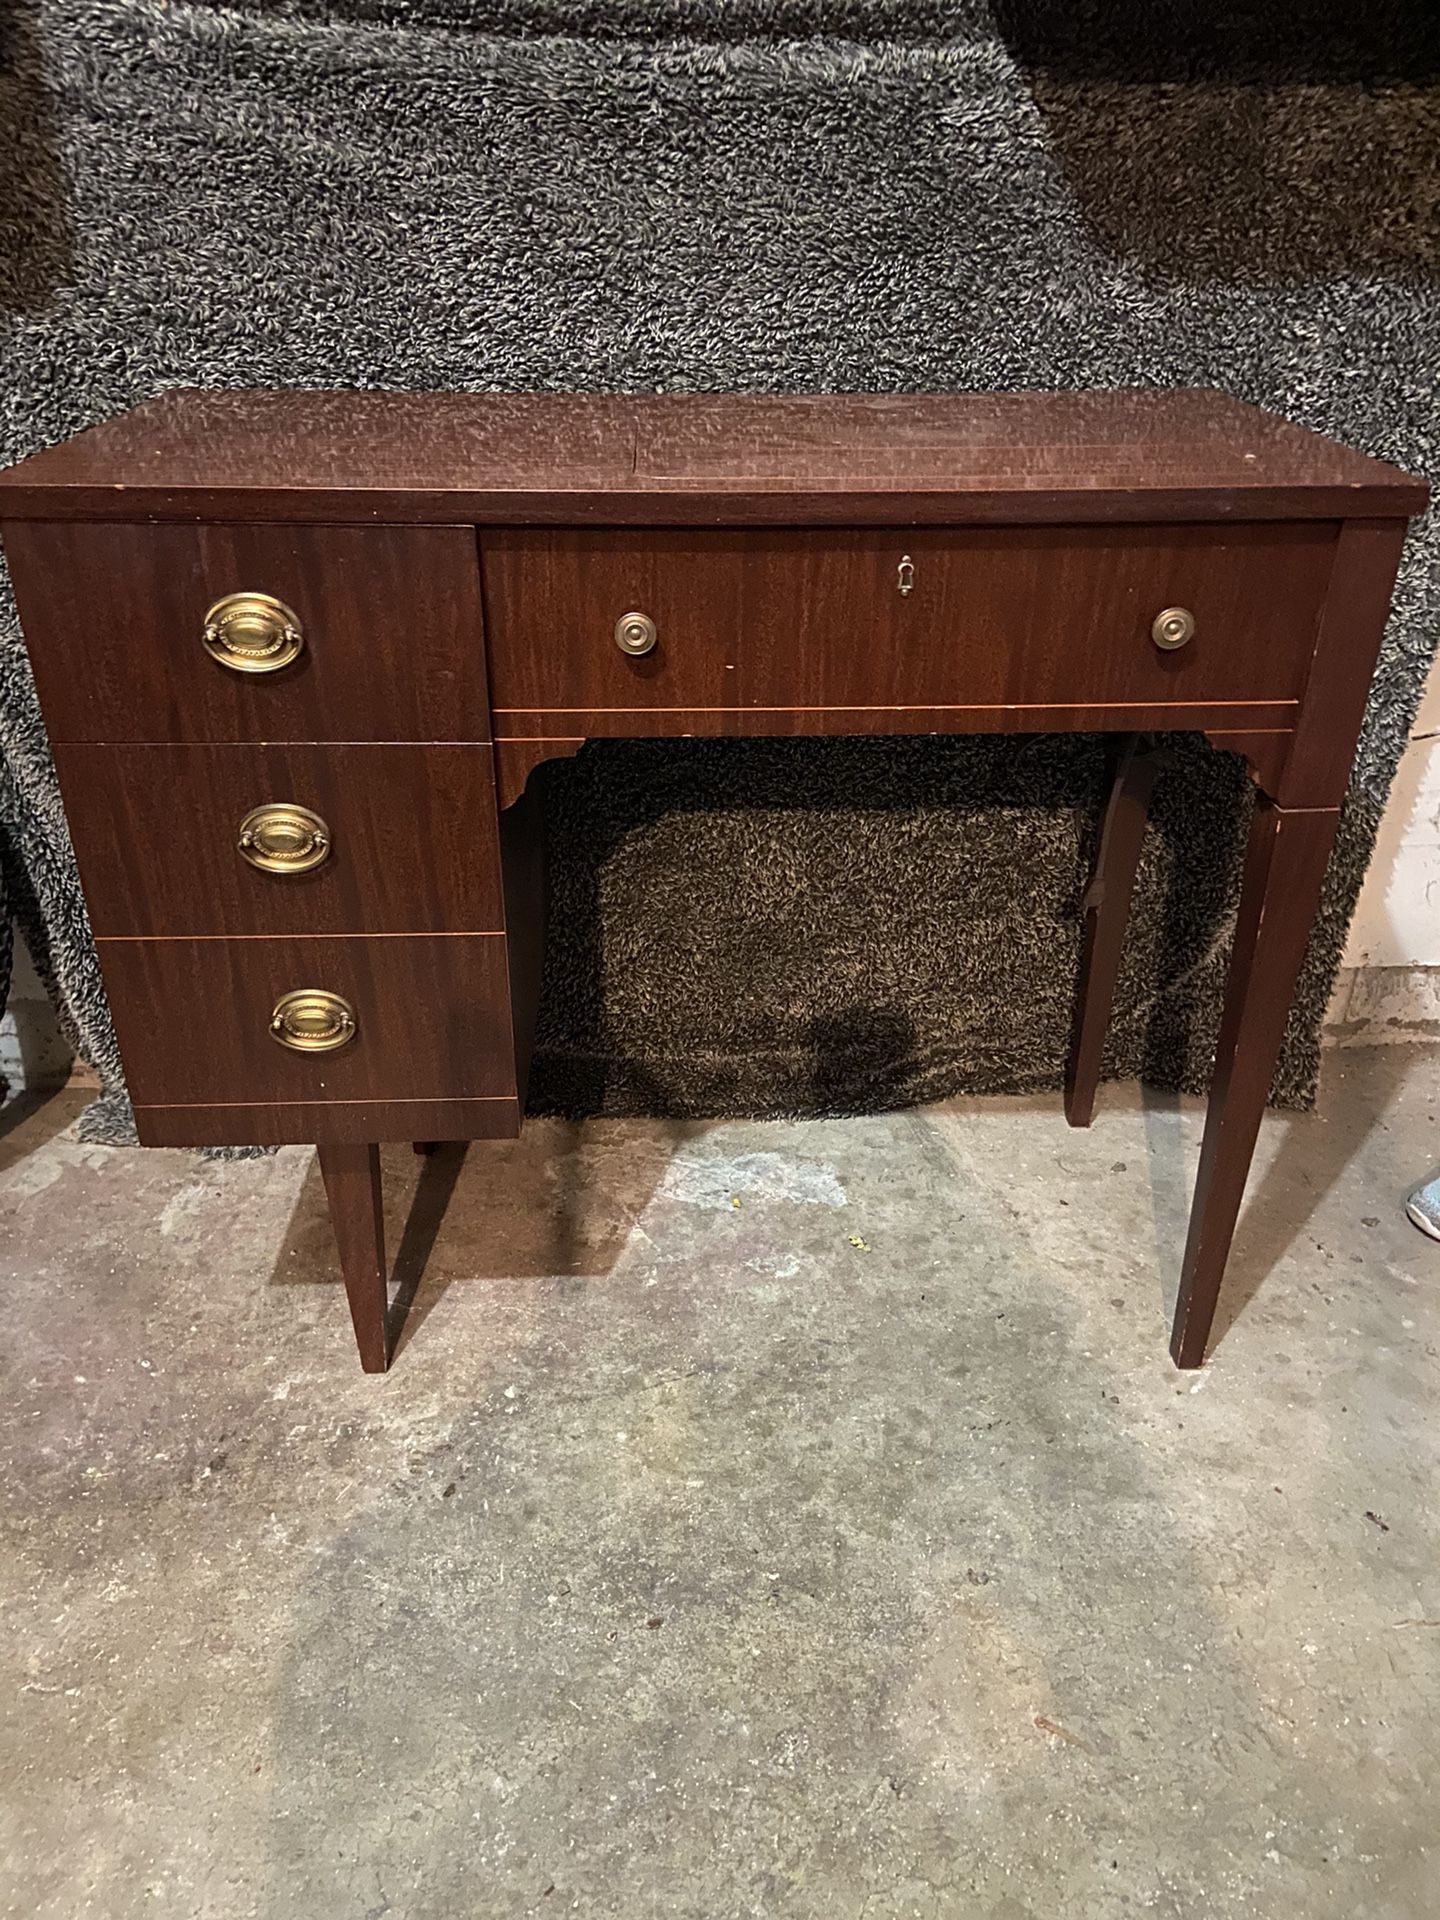 Antique Singer sewing cabinet